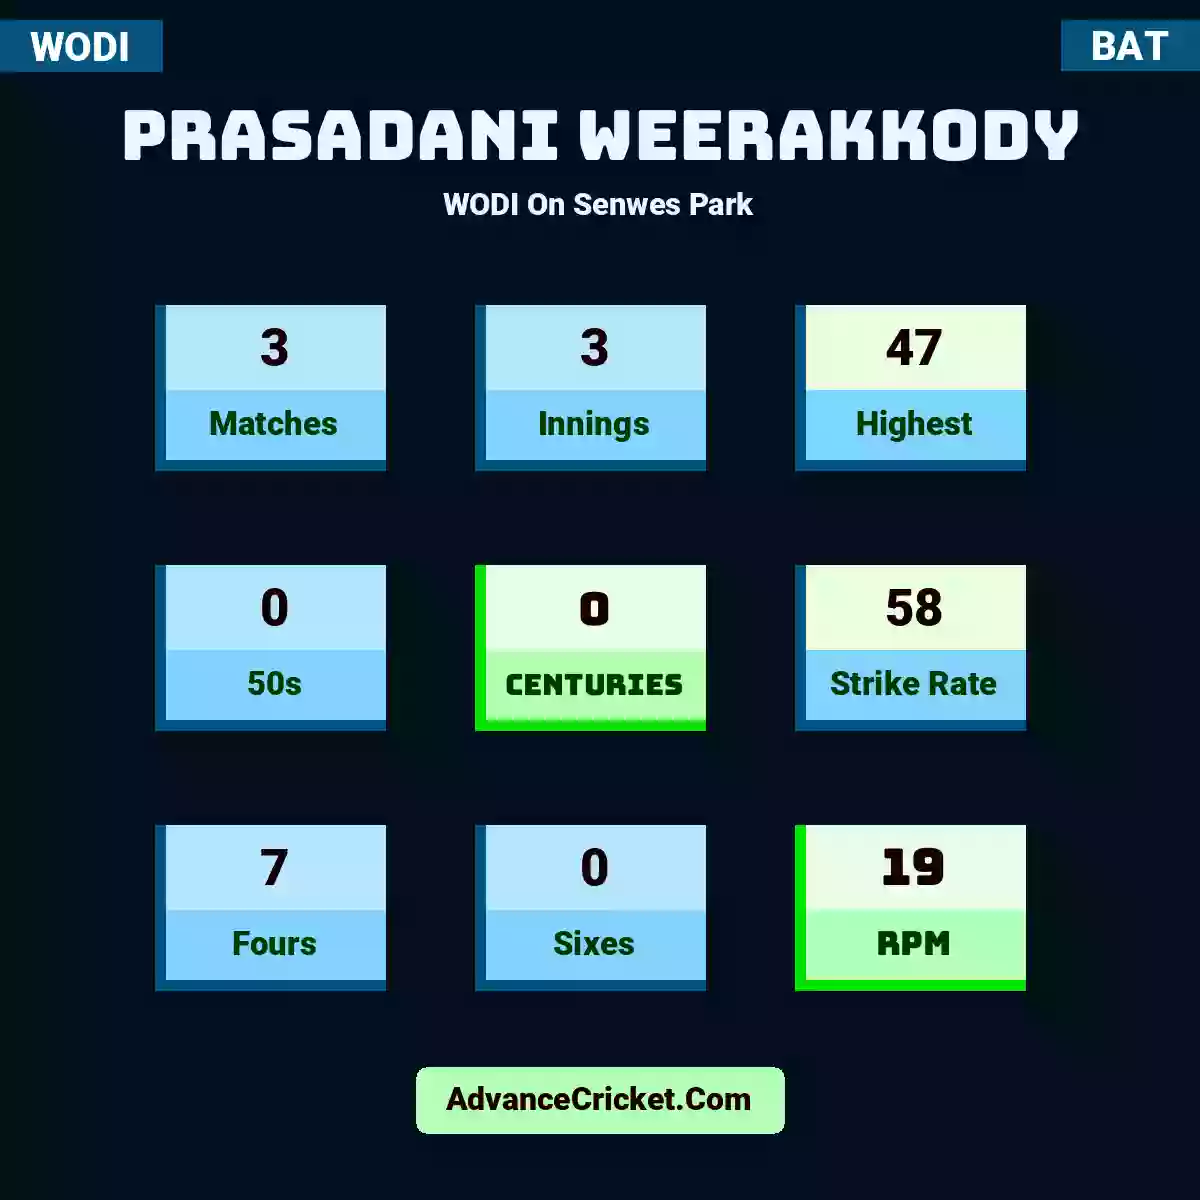 Prasadani Weerakkody WODI  On Senwes Park, Prasadani Weerakkody played 3 matches, scored 47 runs as highest, 0 half-centuries, and 0 centuries, with a strike rate of 58. P.Weerakkody hit 7 fours and 0 sixes, with an RPM of 19.